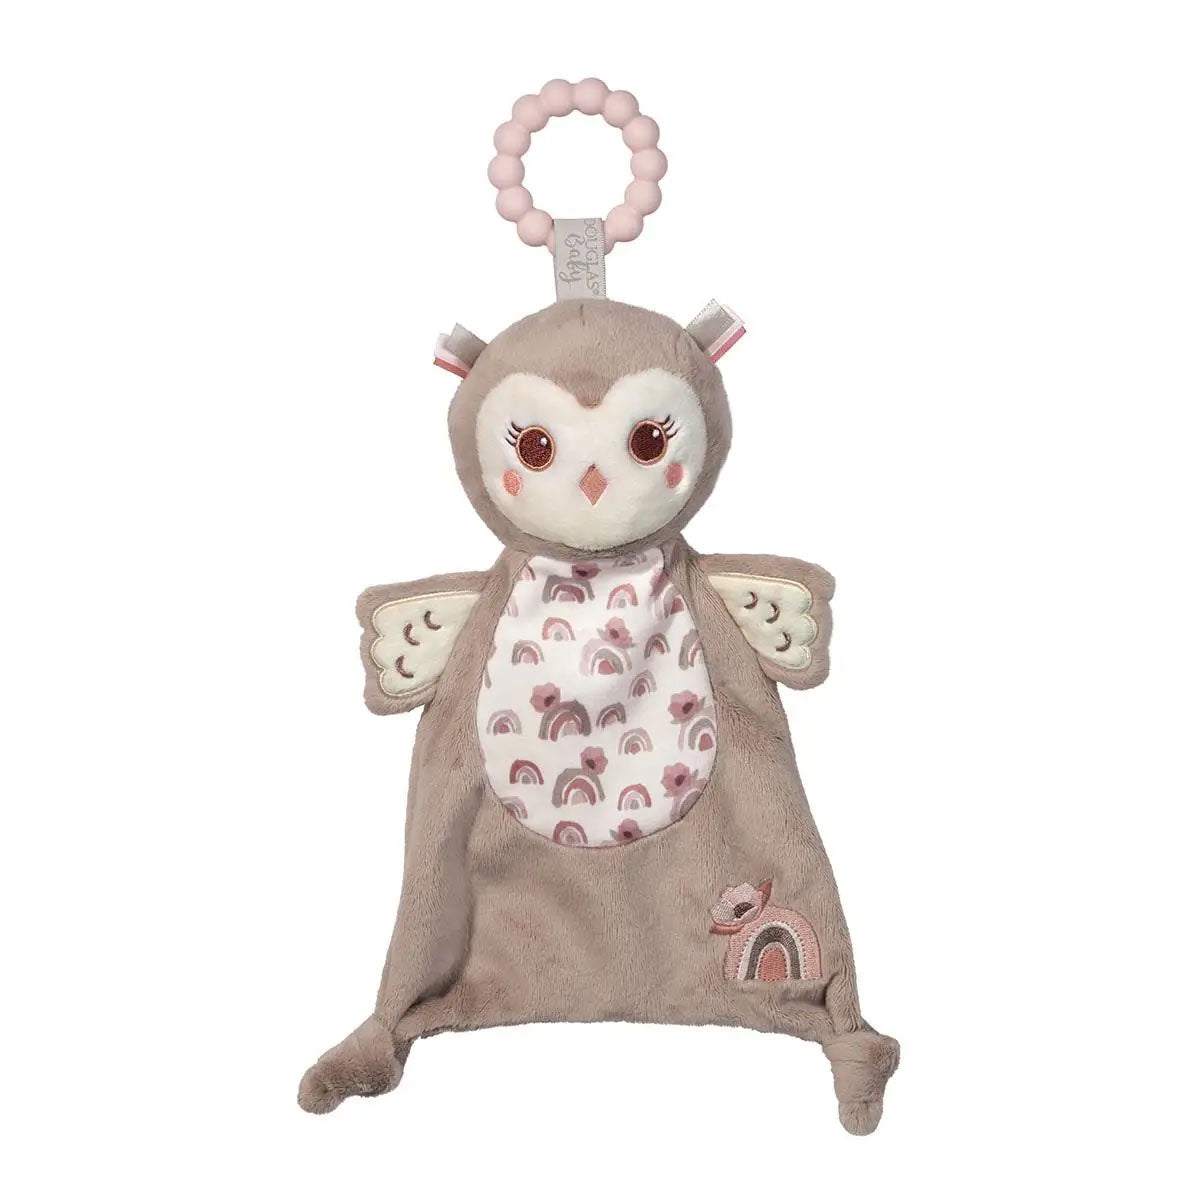 Teether - Nova the Owl from Douglas Cuddle Toys